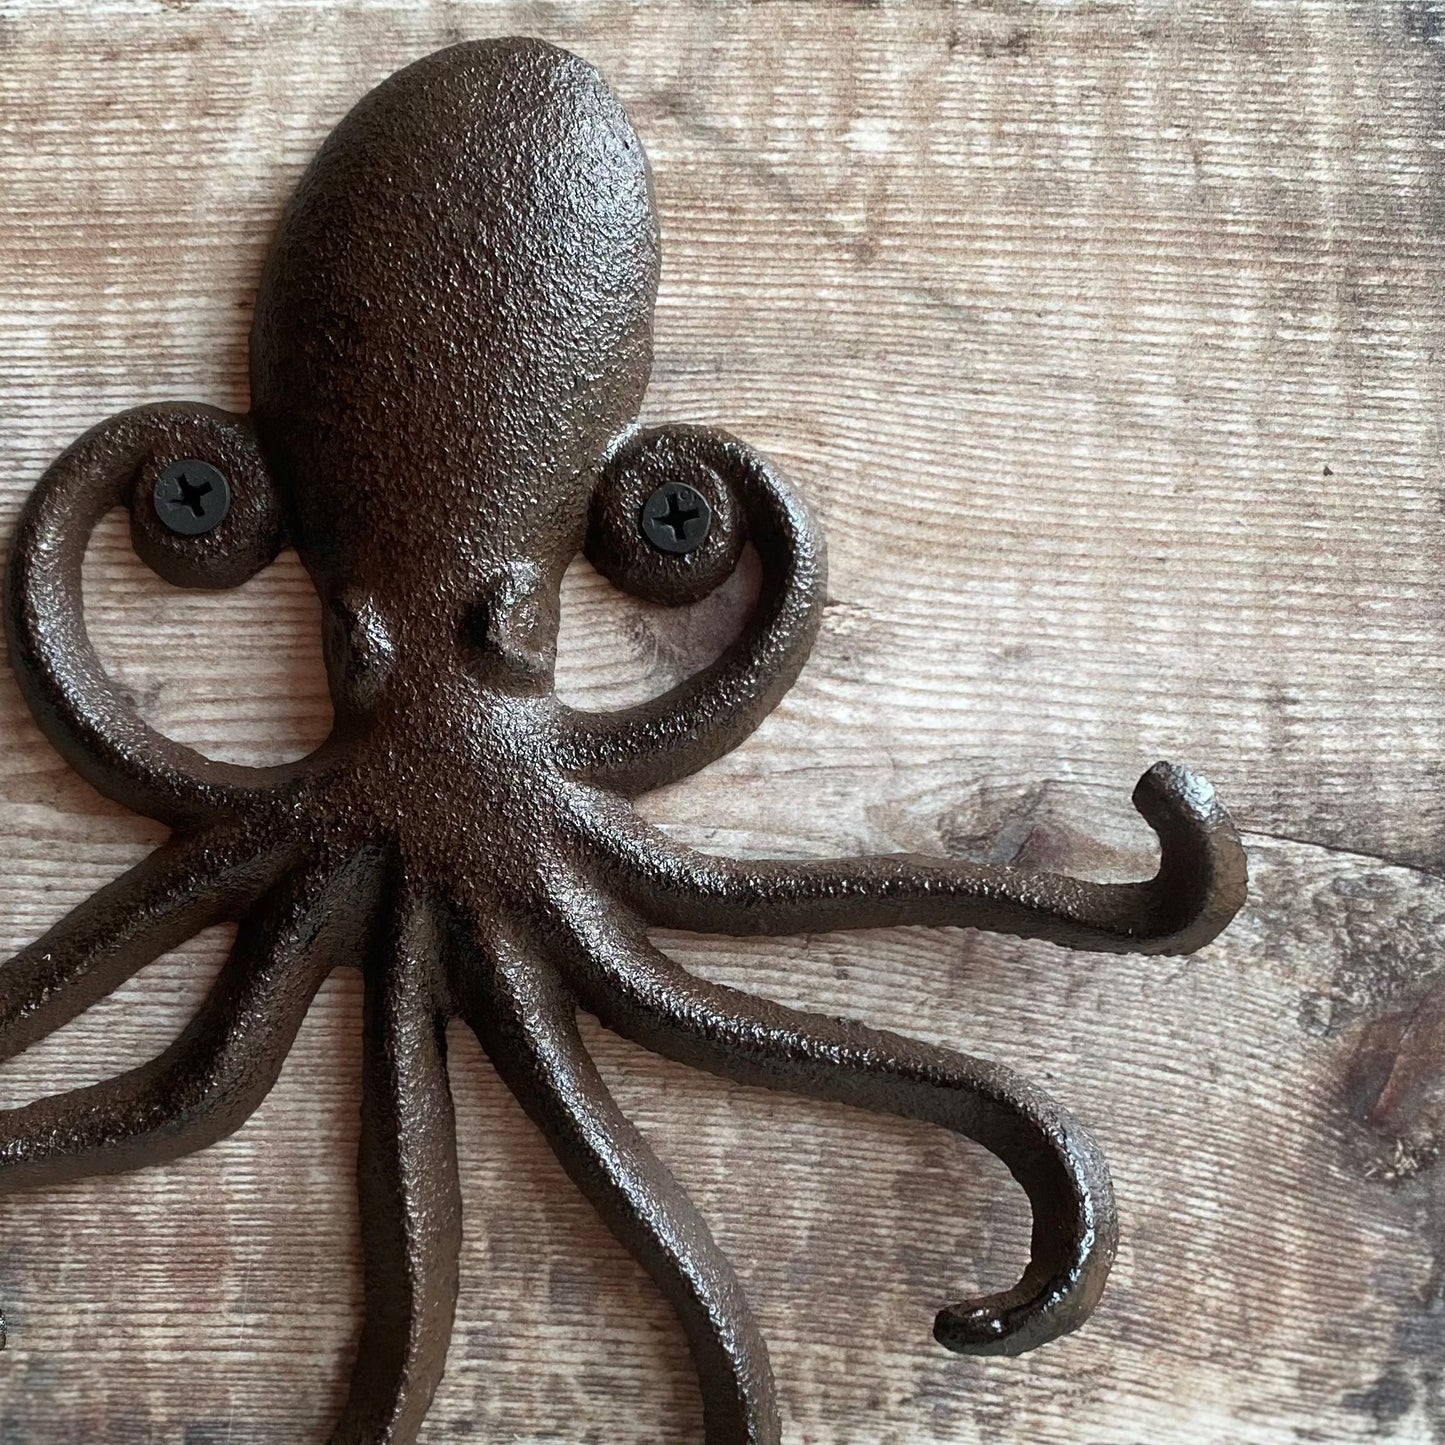 Octopus Wall Hook Rack in Cast Iron